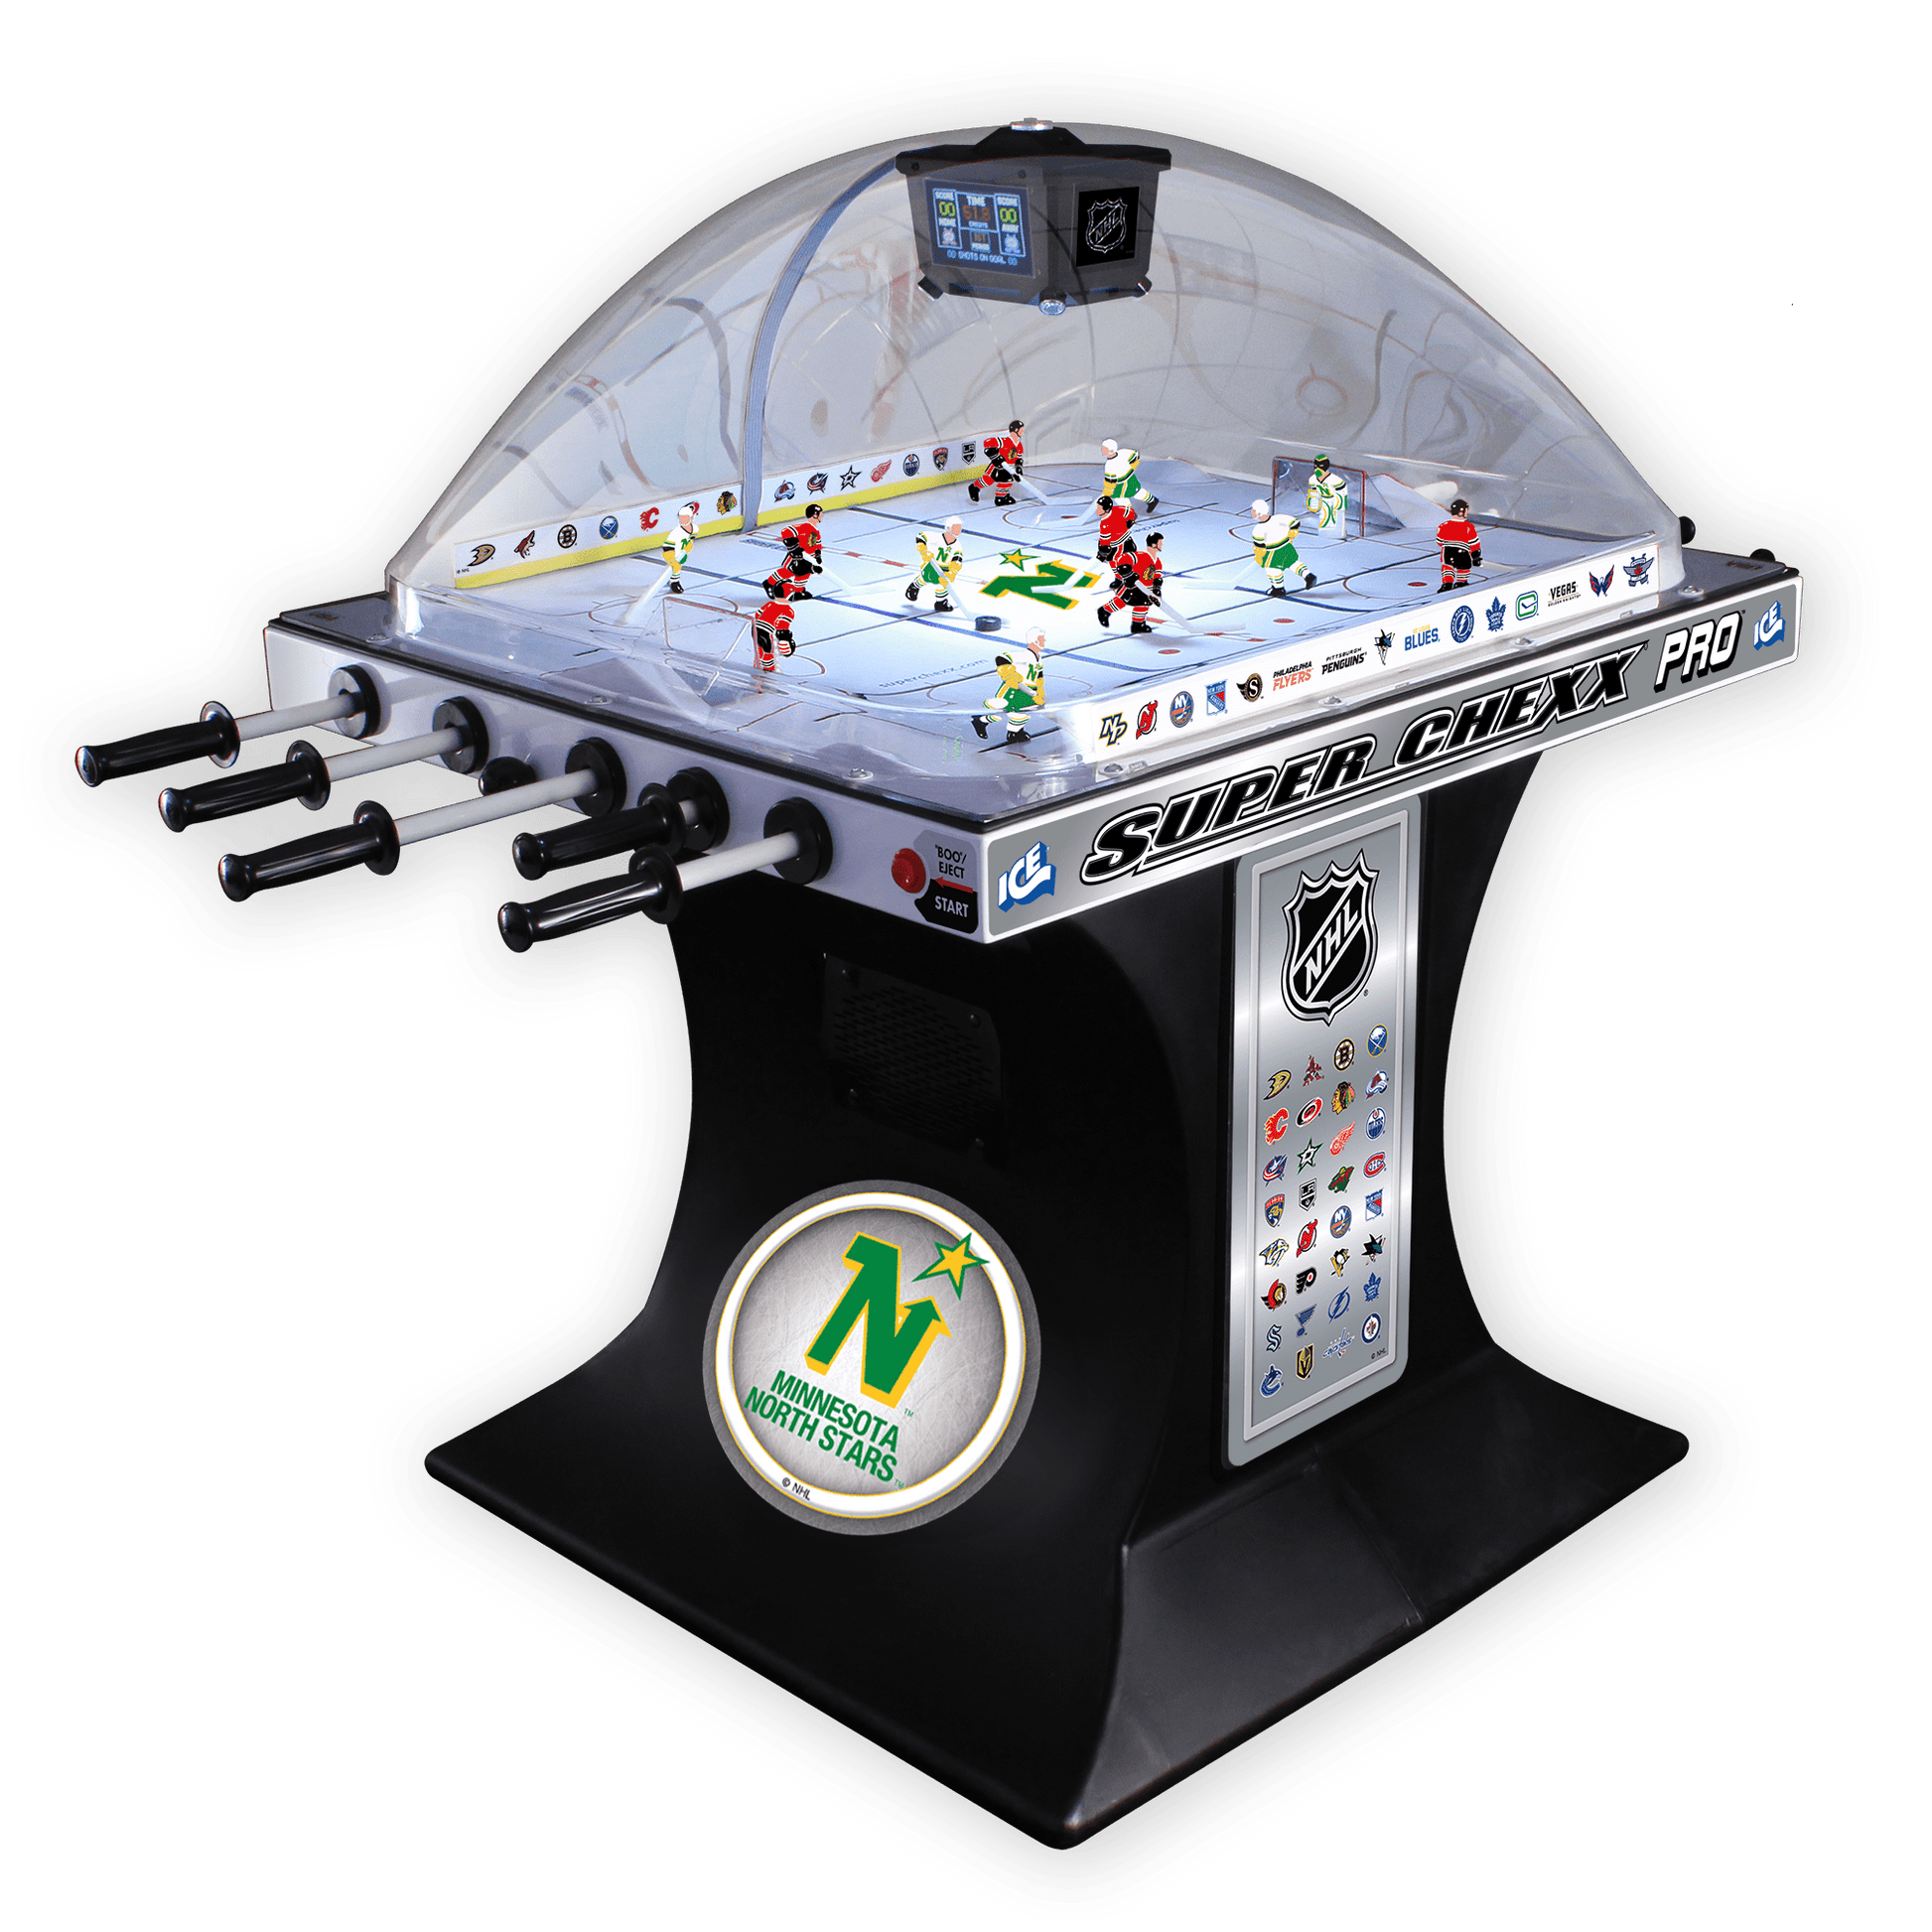 North Stars NHL Super Chexx Pro Bubble Hockey Arcade Innovative Concepts in Entertainment   